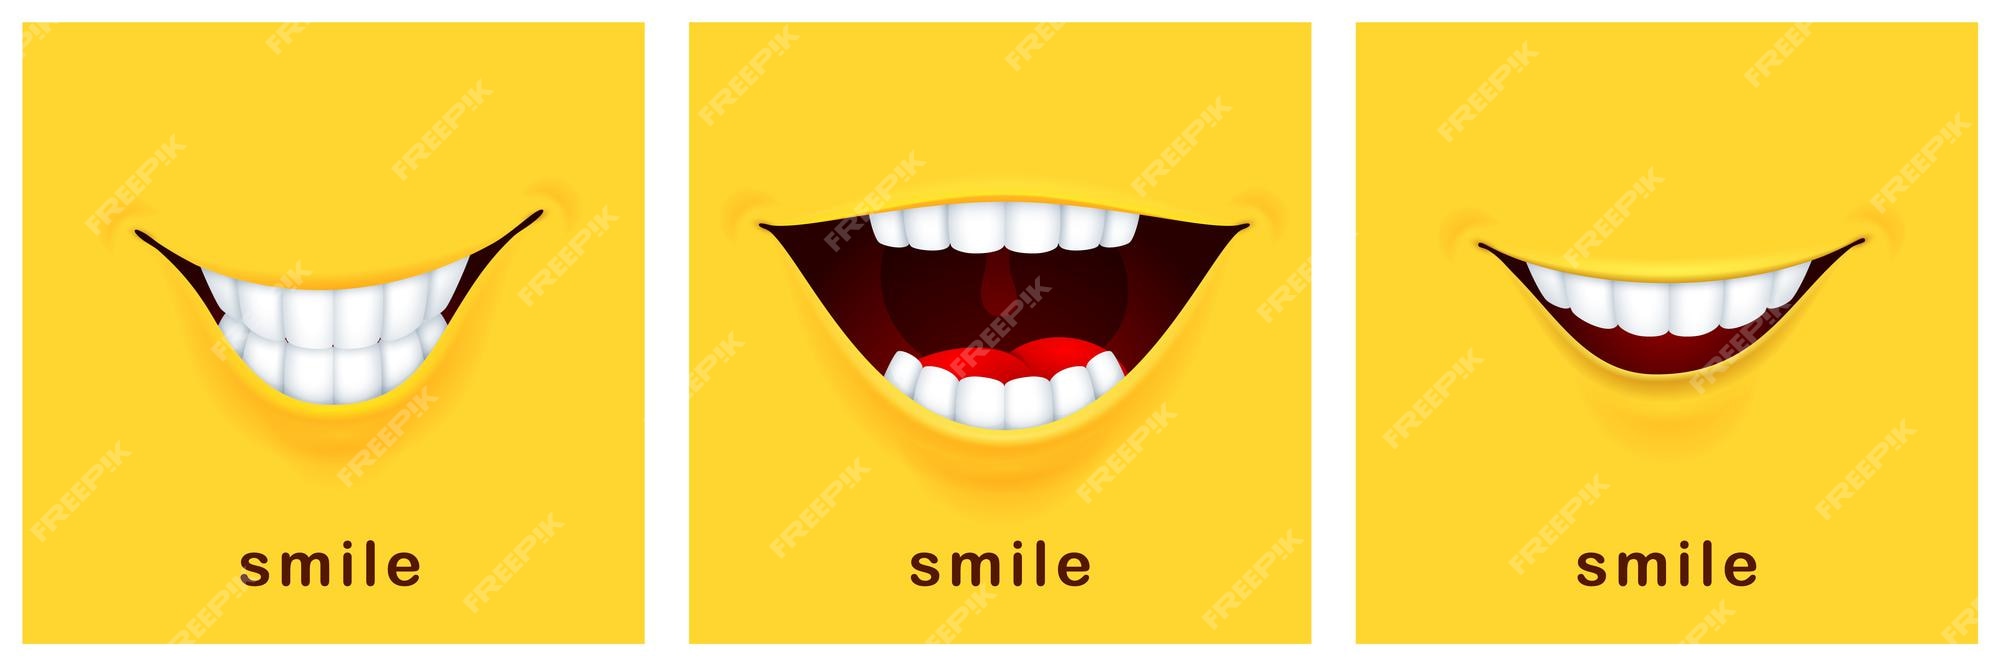 Teeth Smile Mouth Images - Free Download on Freepik